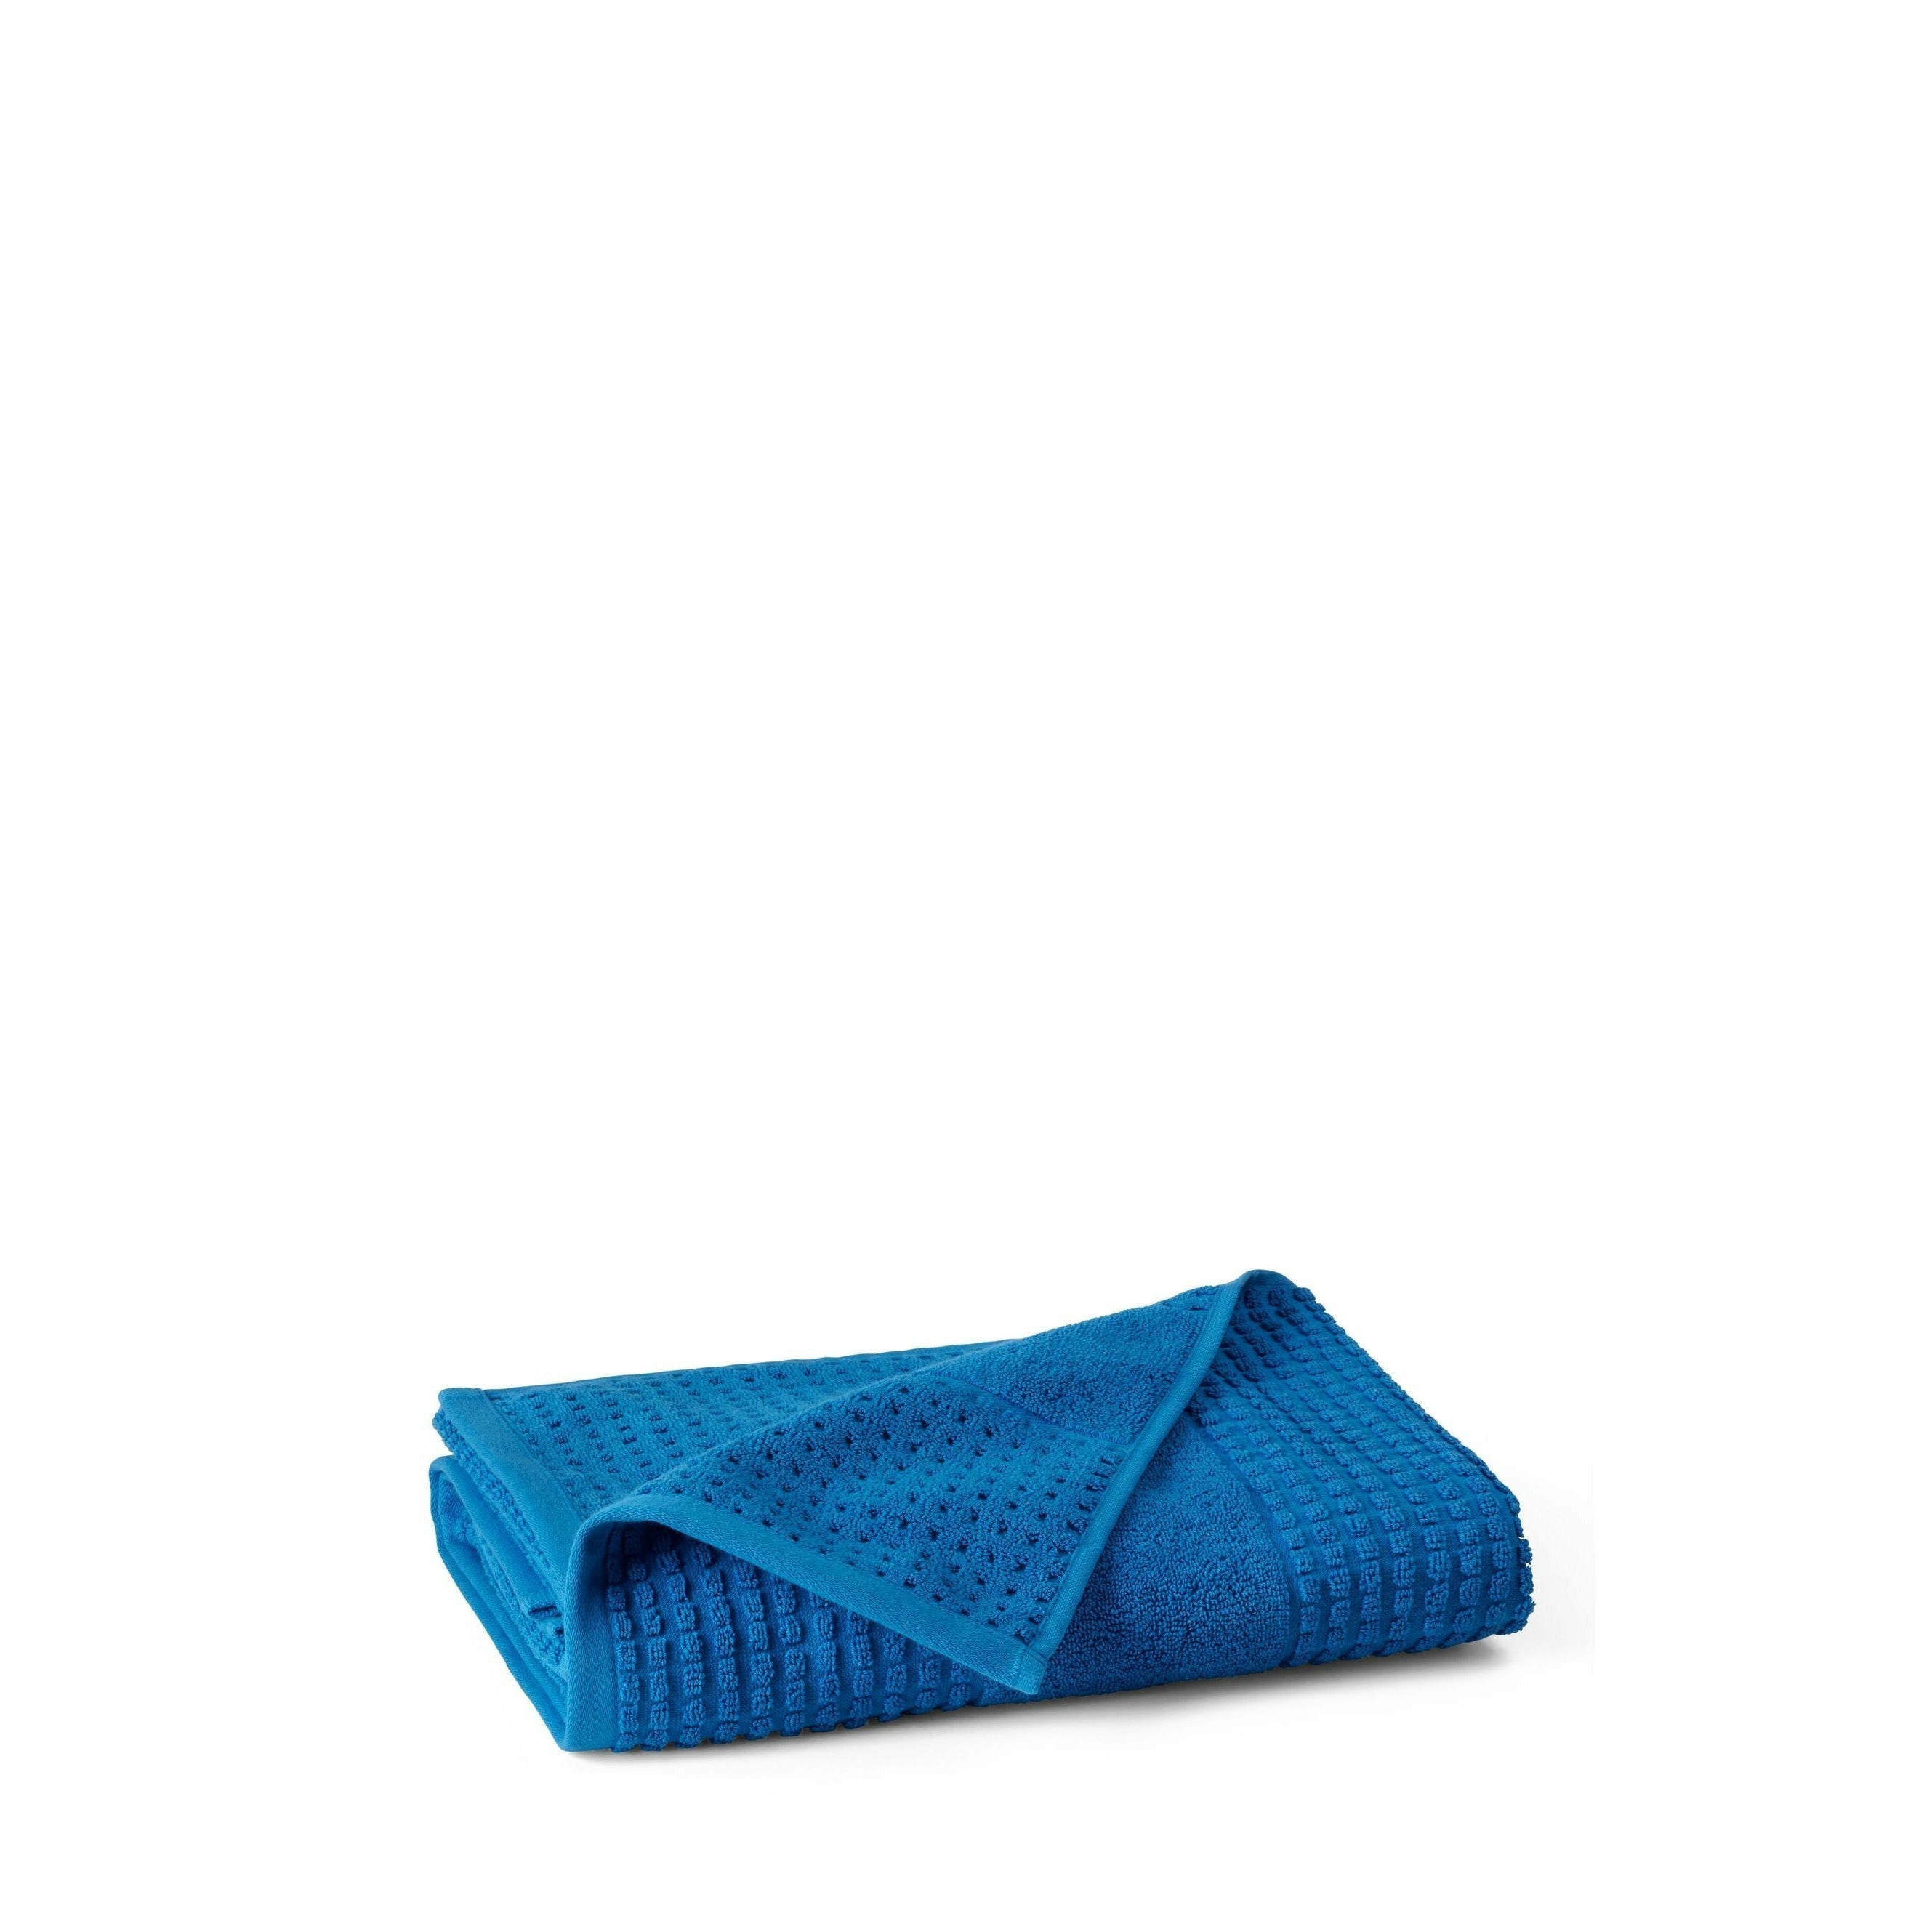 Juna Kontroller håndklæde 70x140 cm, blå